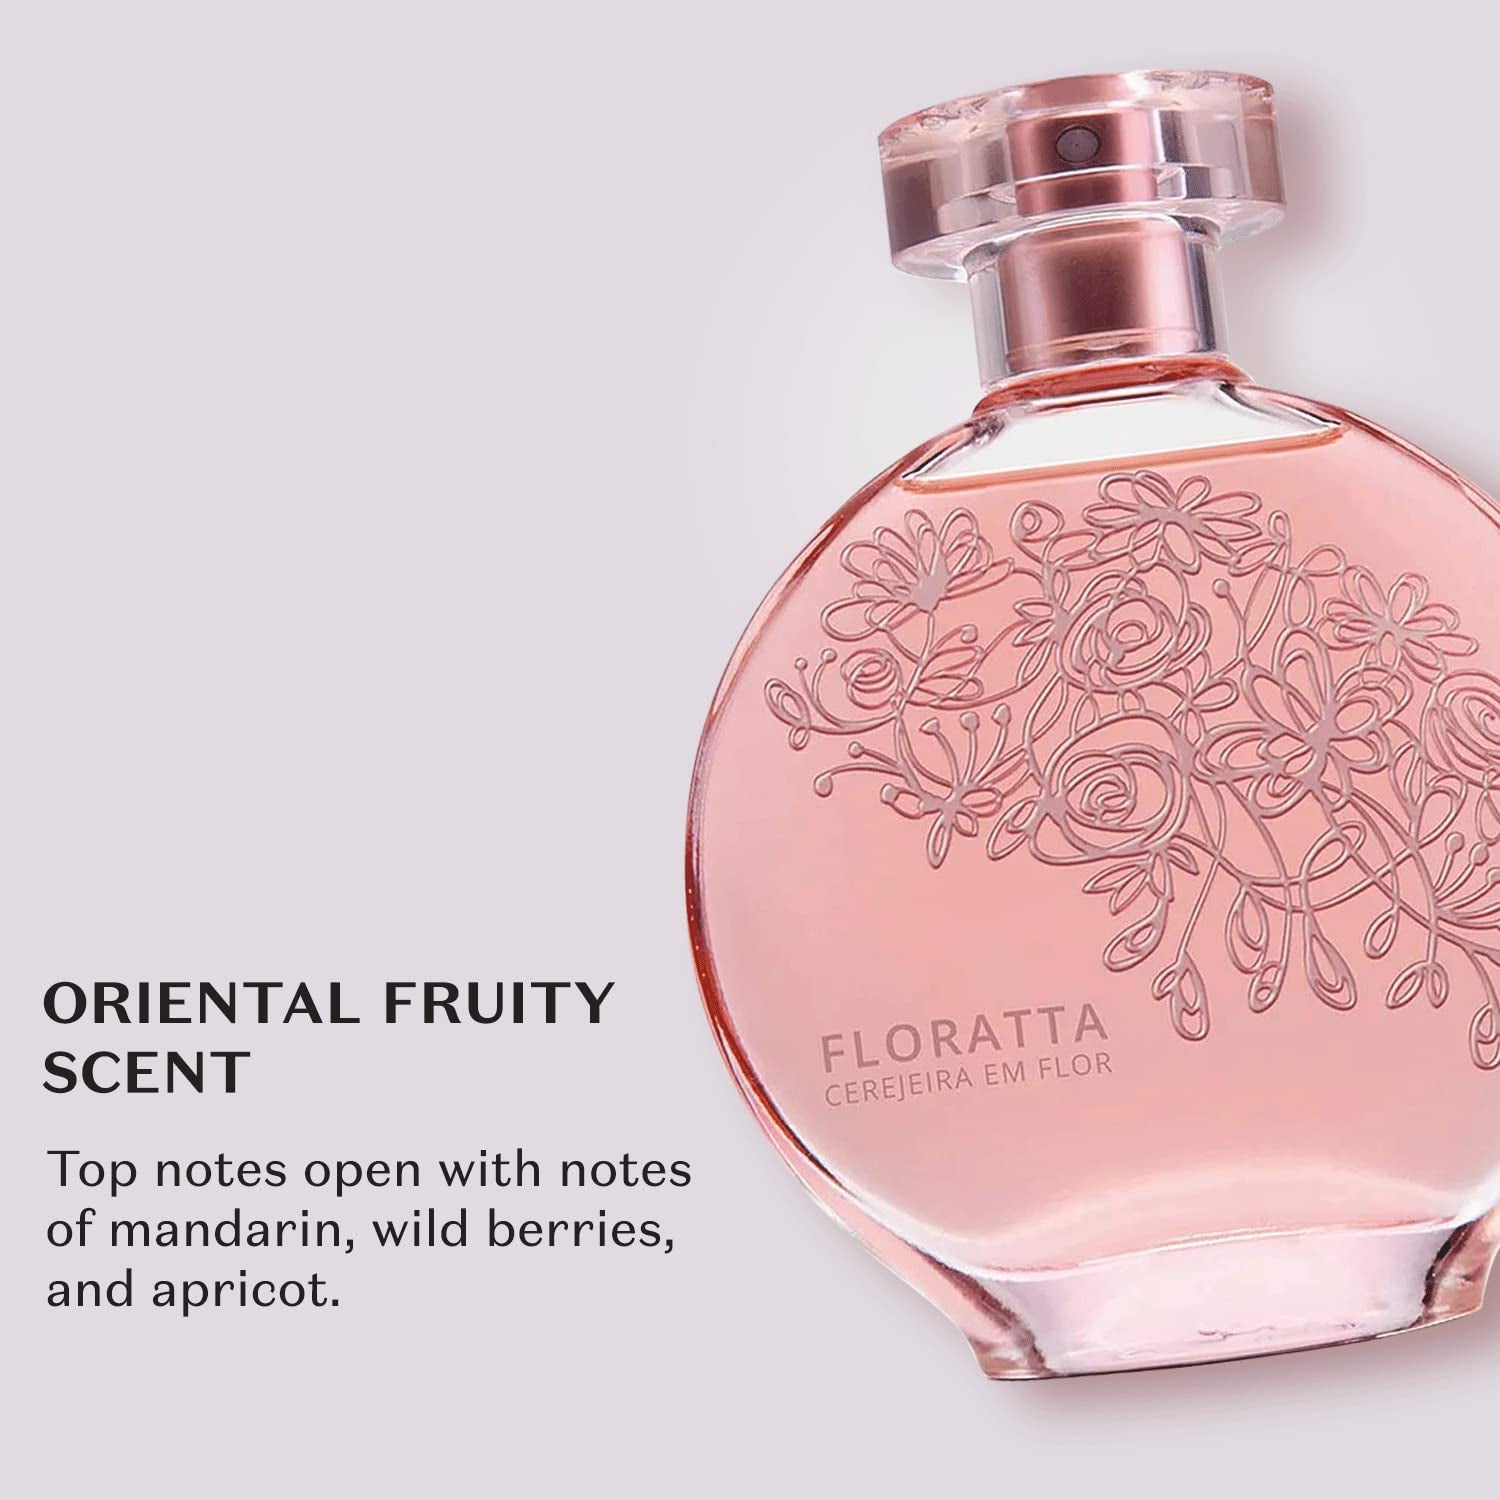 O Boticário Floratta Cherry Blossom Eau de Toilette, Long-Lasting, Fruity Floriental Fragrance Perfume for Women, 2.5 Ounce